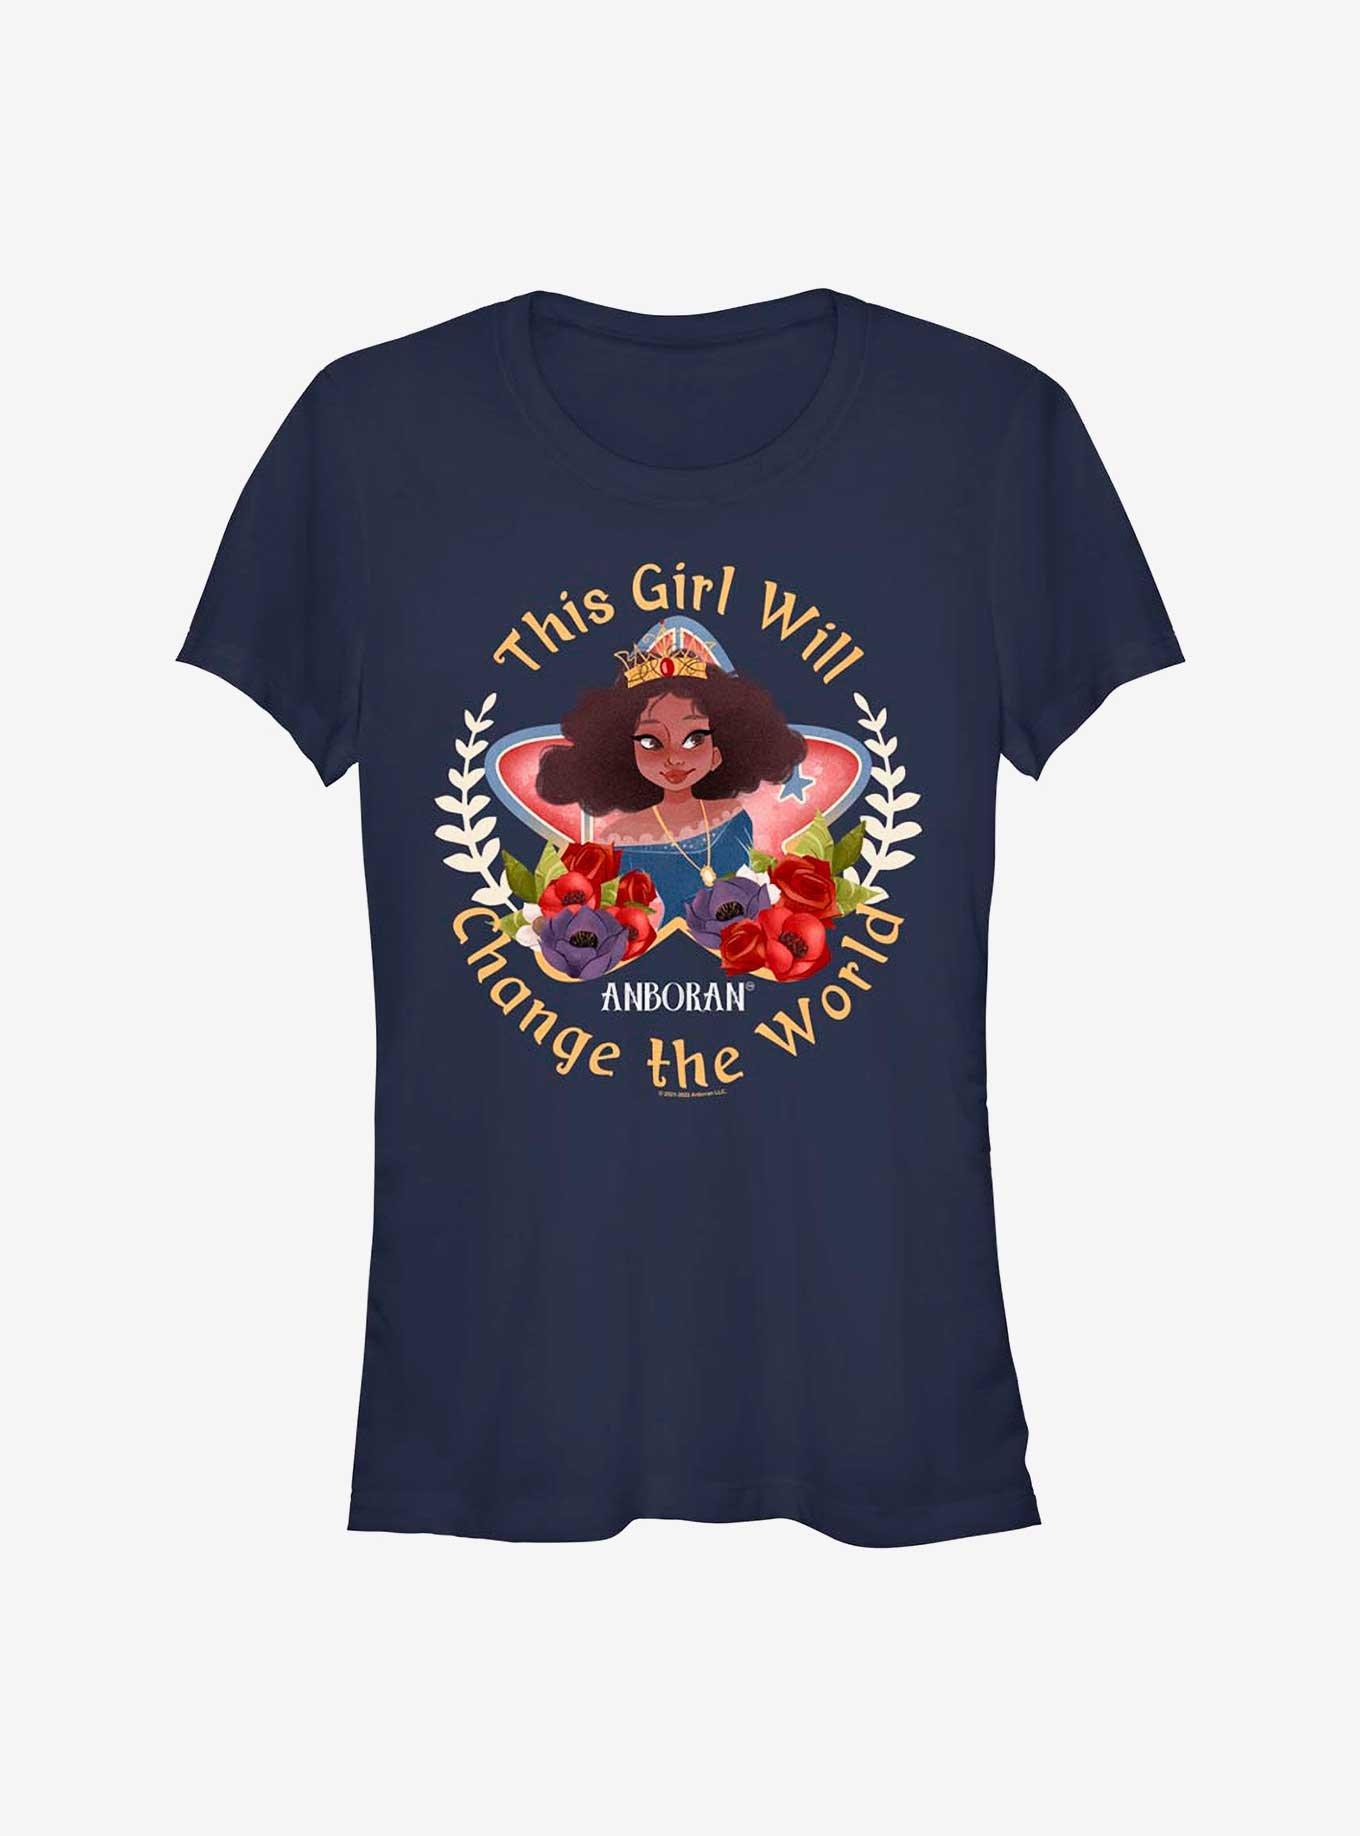 Anboran Change The World Girls T-Shirt